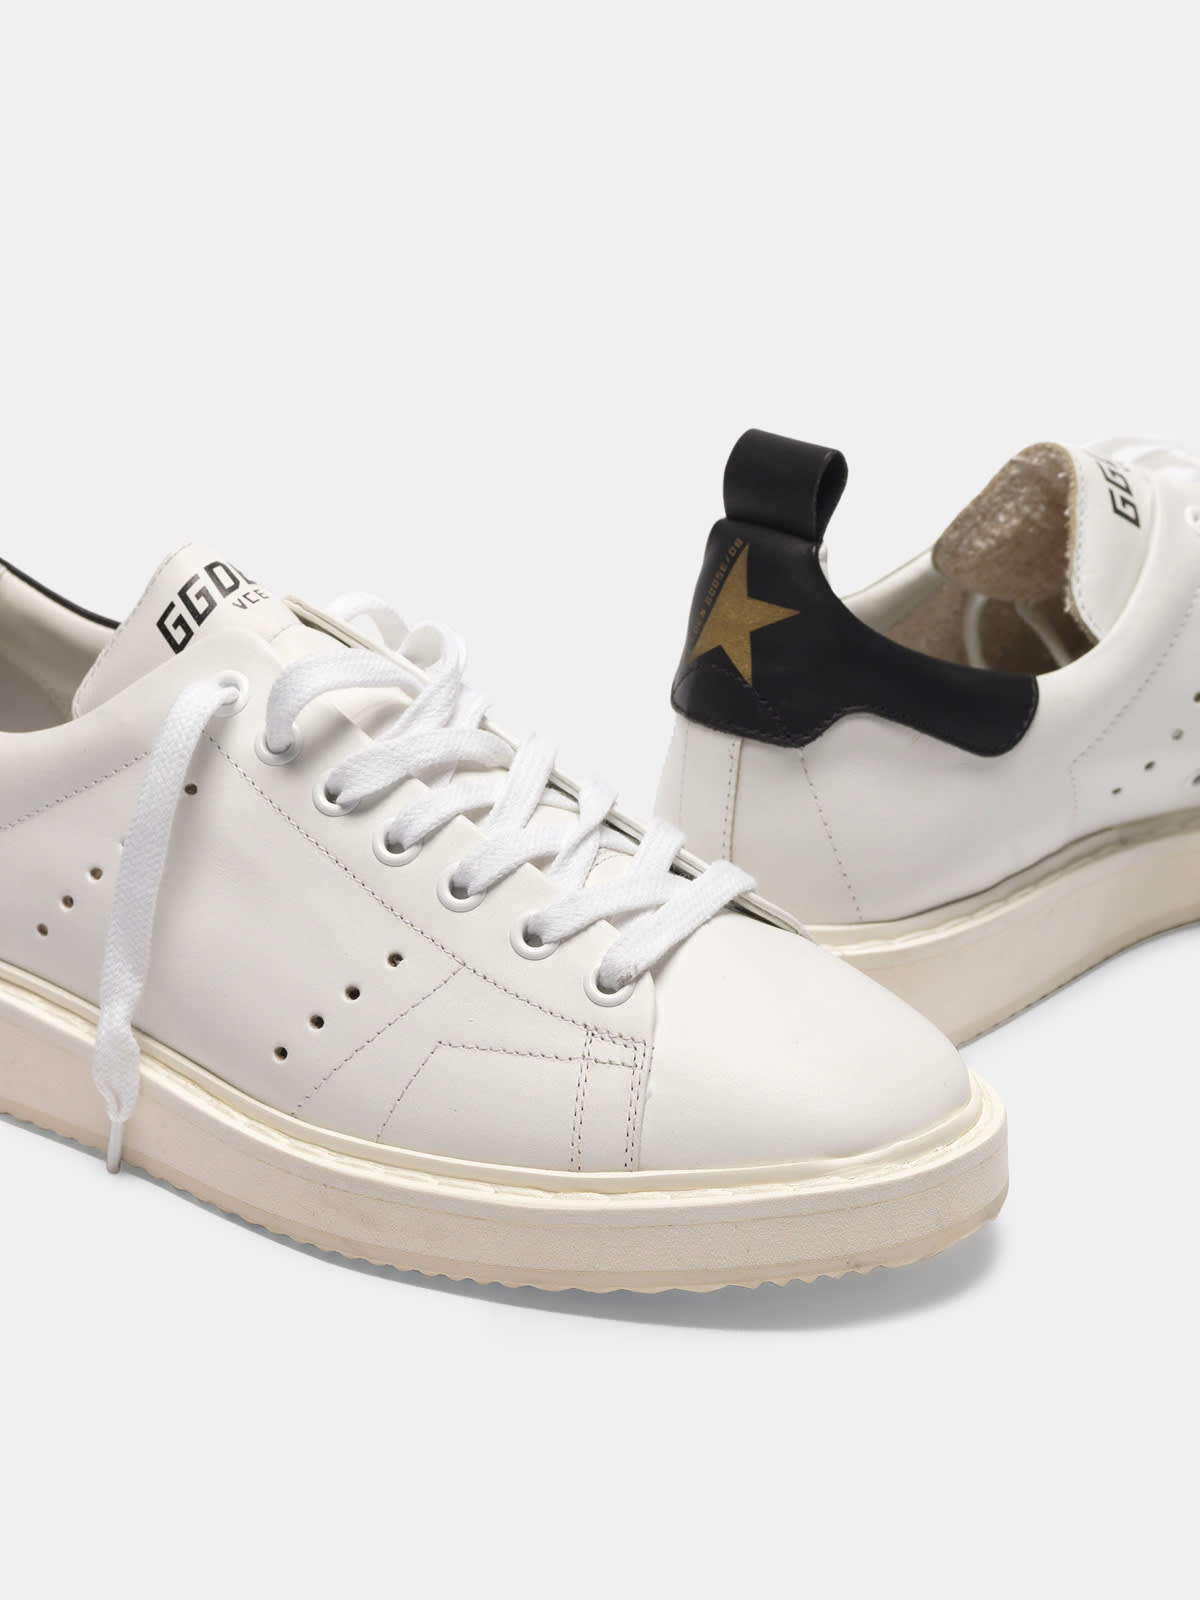 Starter sneakers in leather with black heel tab | Golden Goose